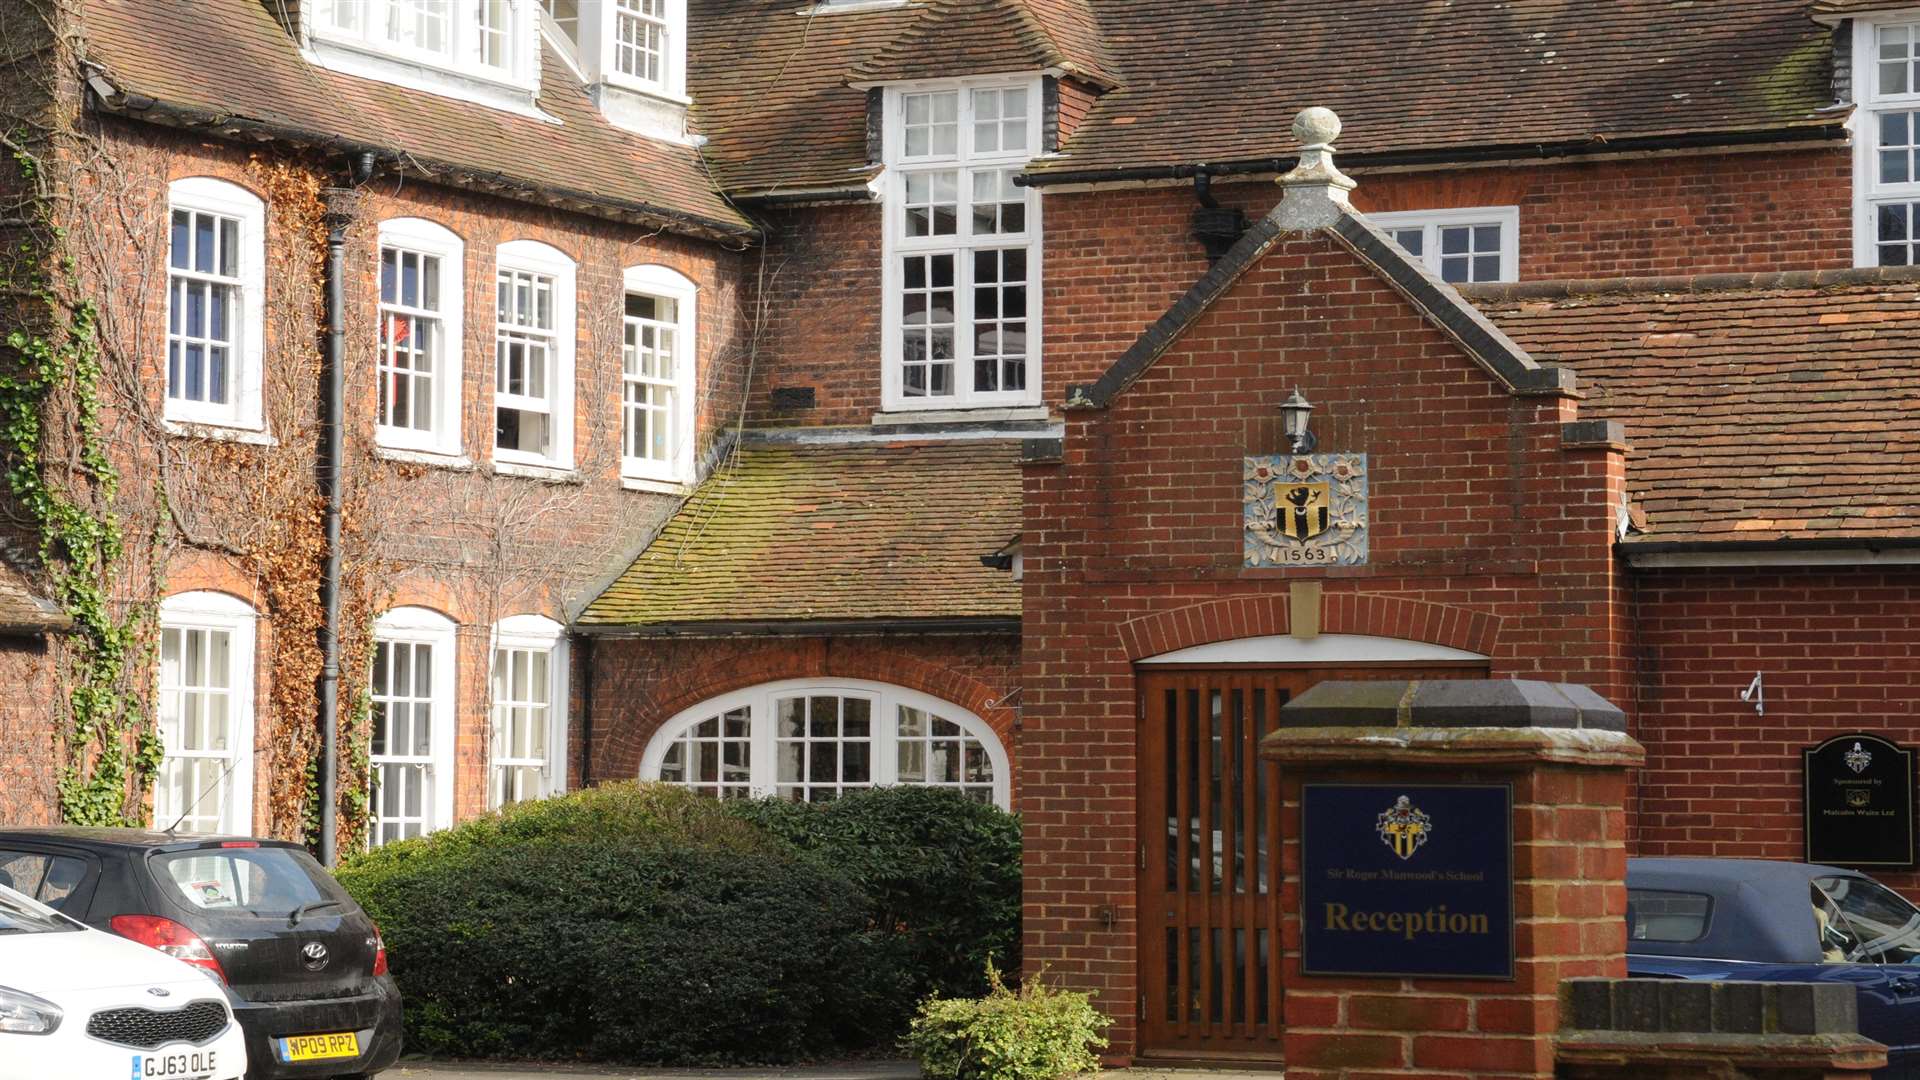 Sir Roger Manwood's School in Sandwich